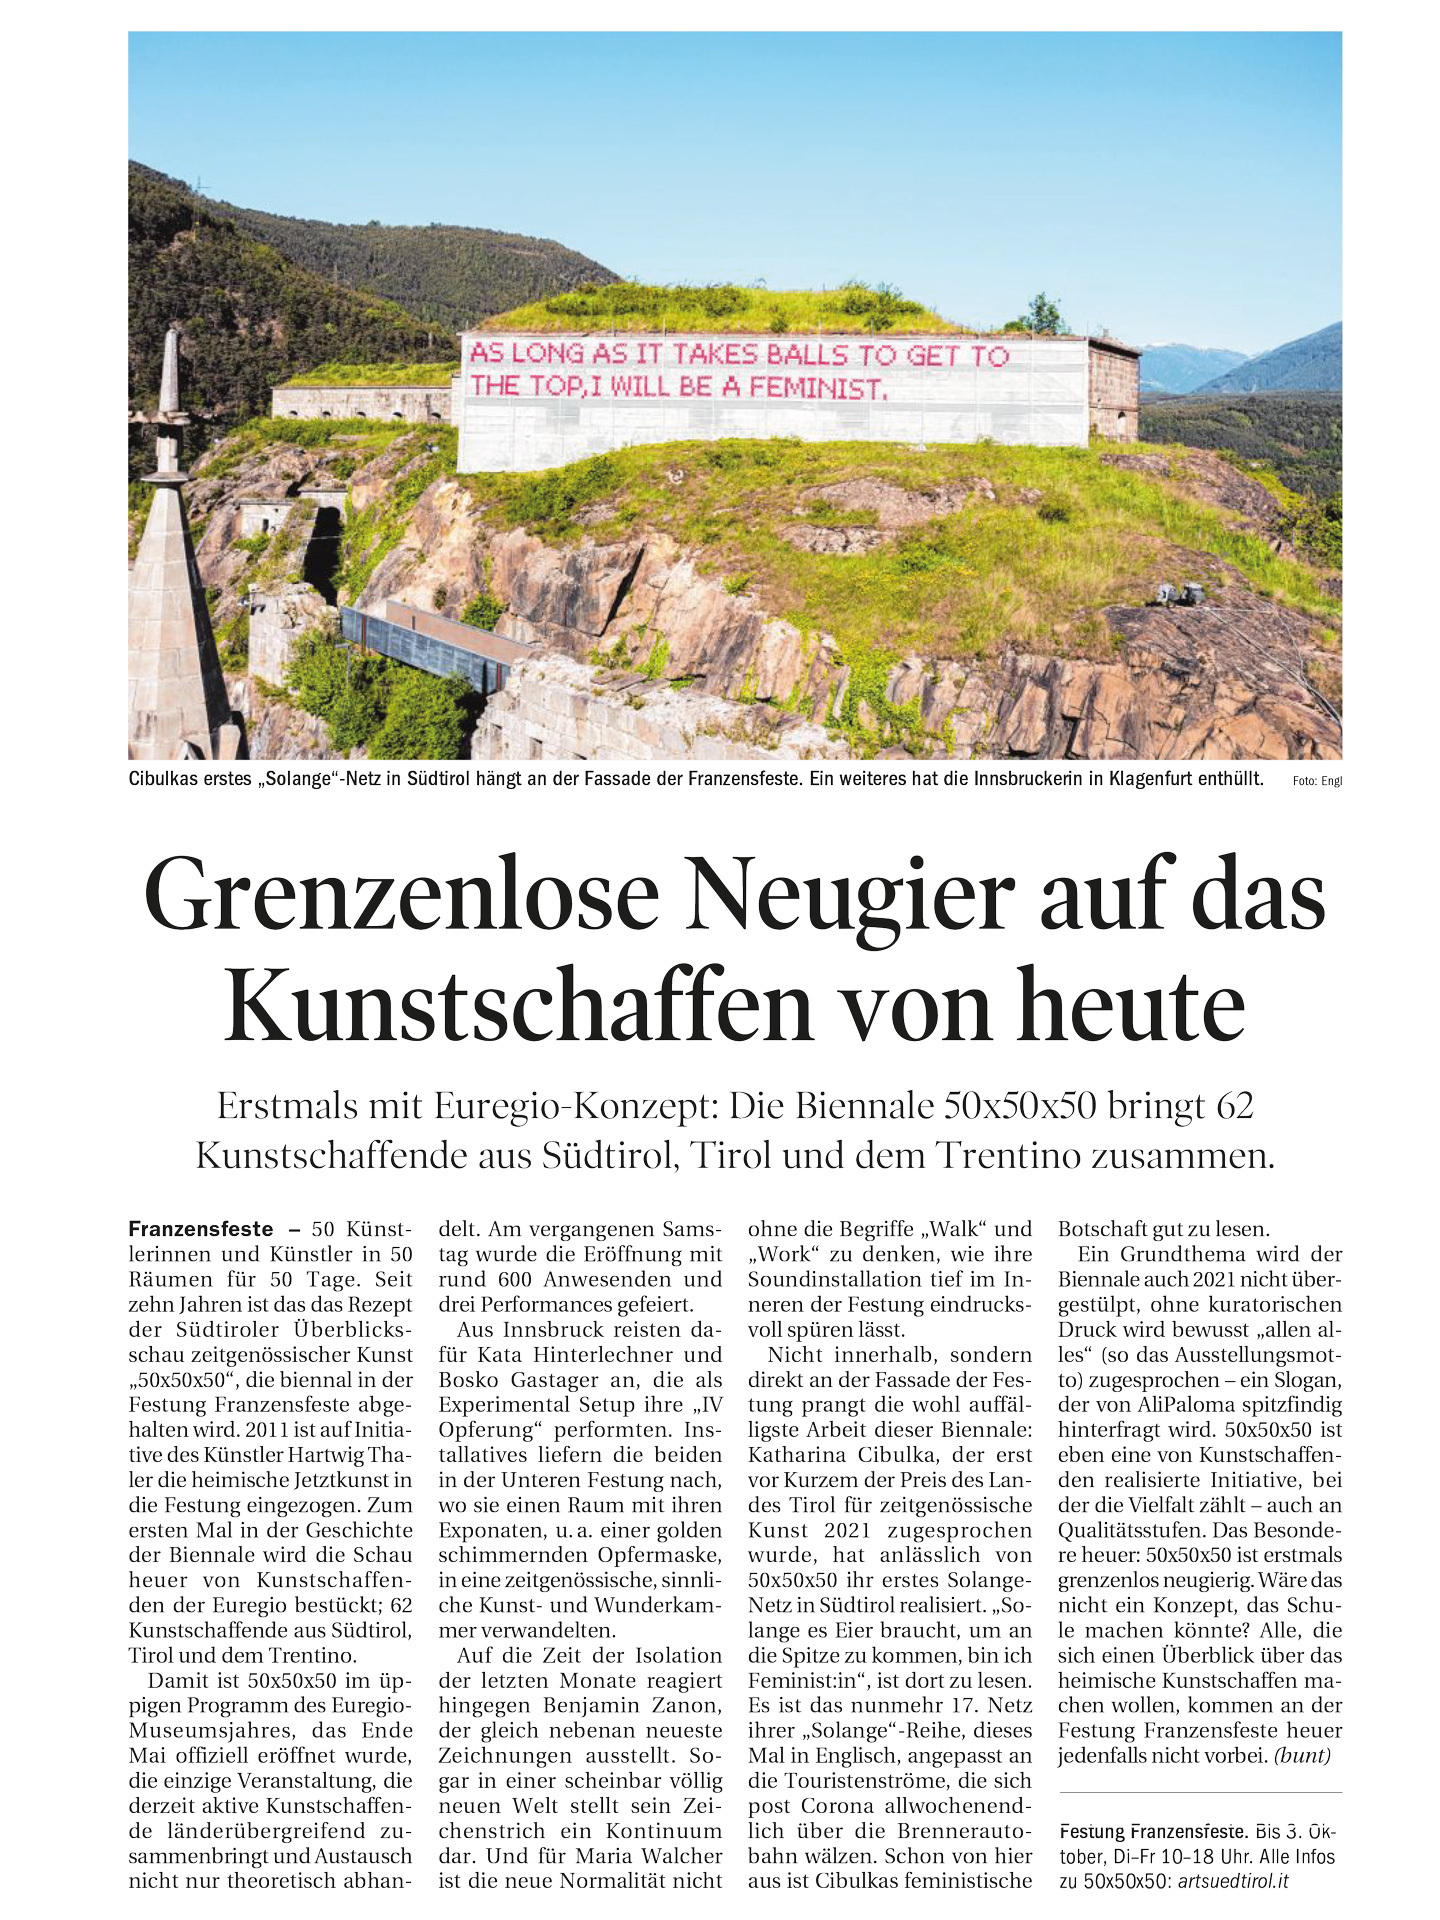 Tiroler Tageszeitung – Franzensfeste – 08/06/21